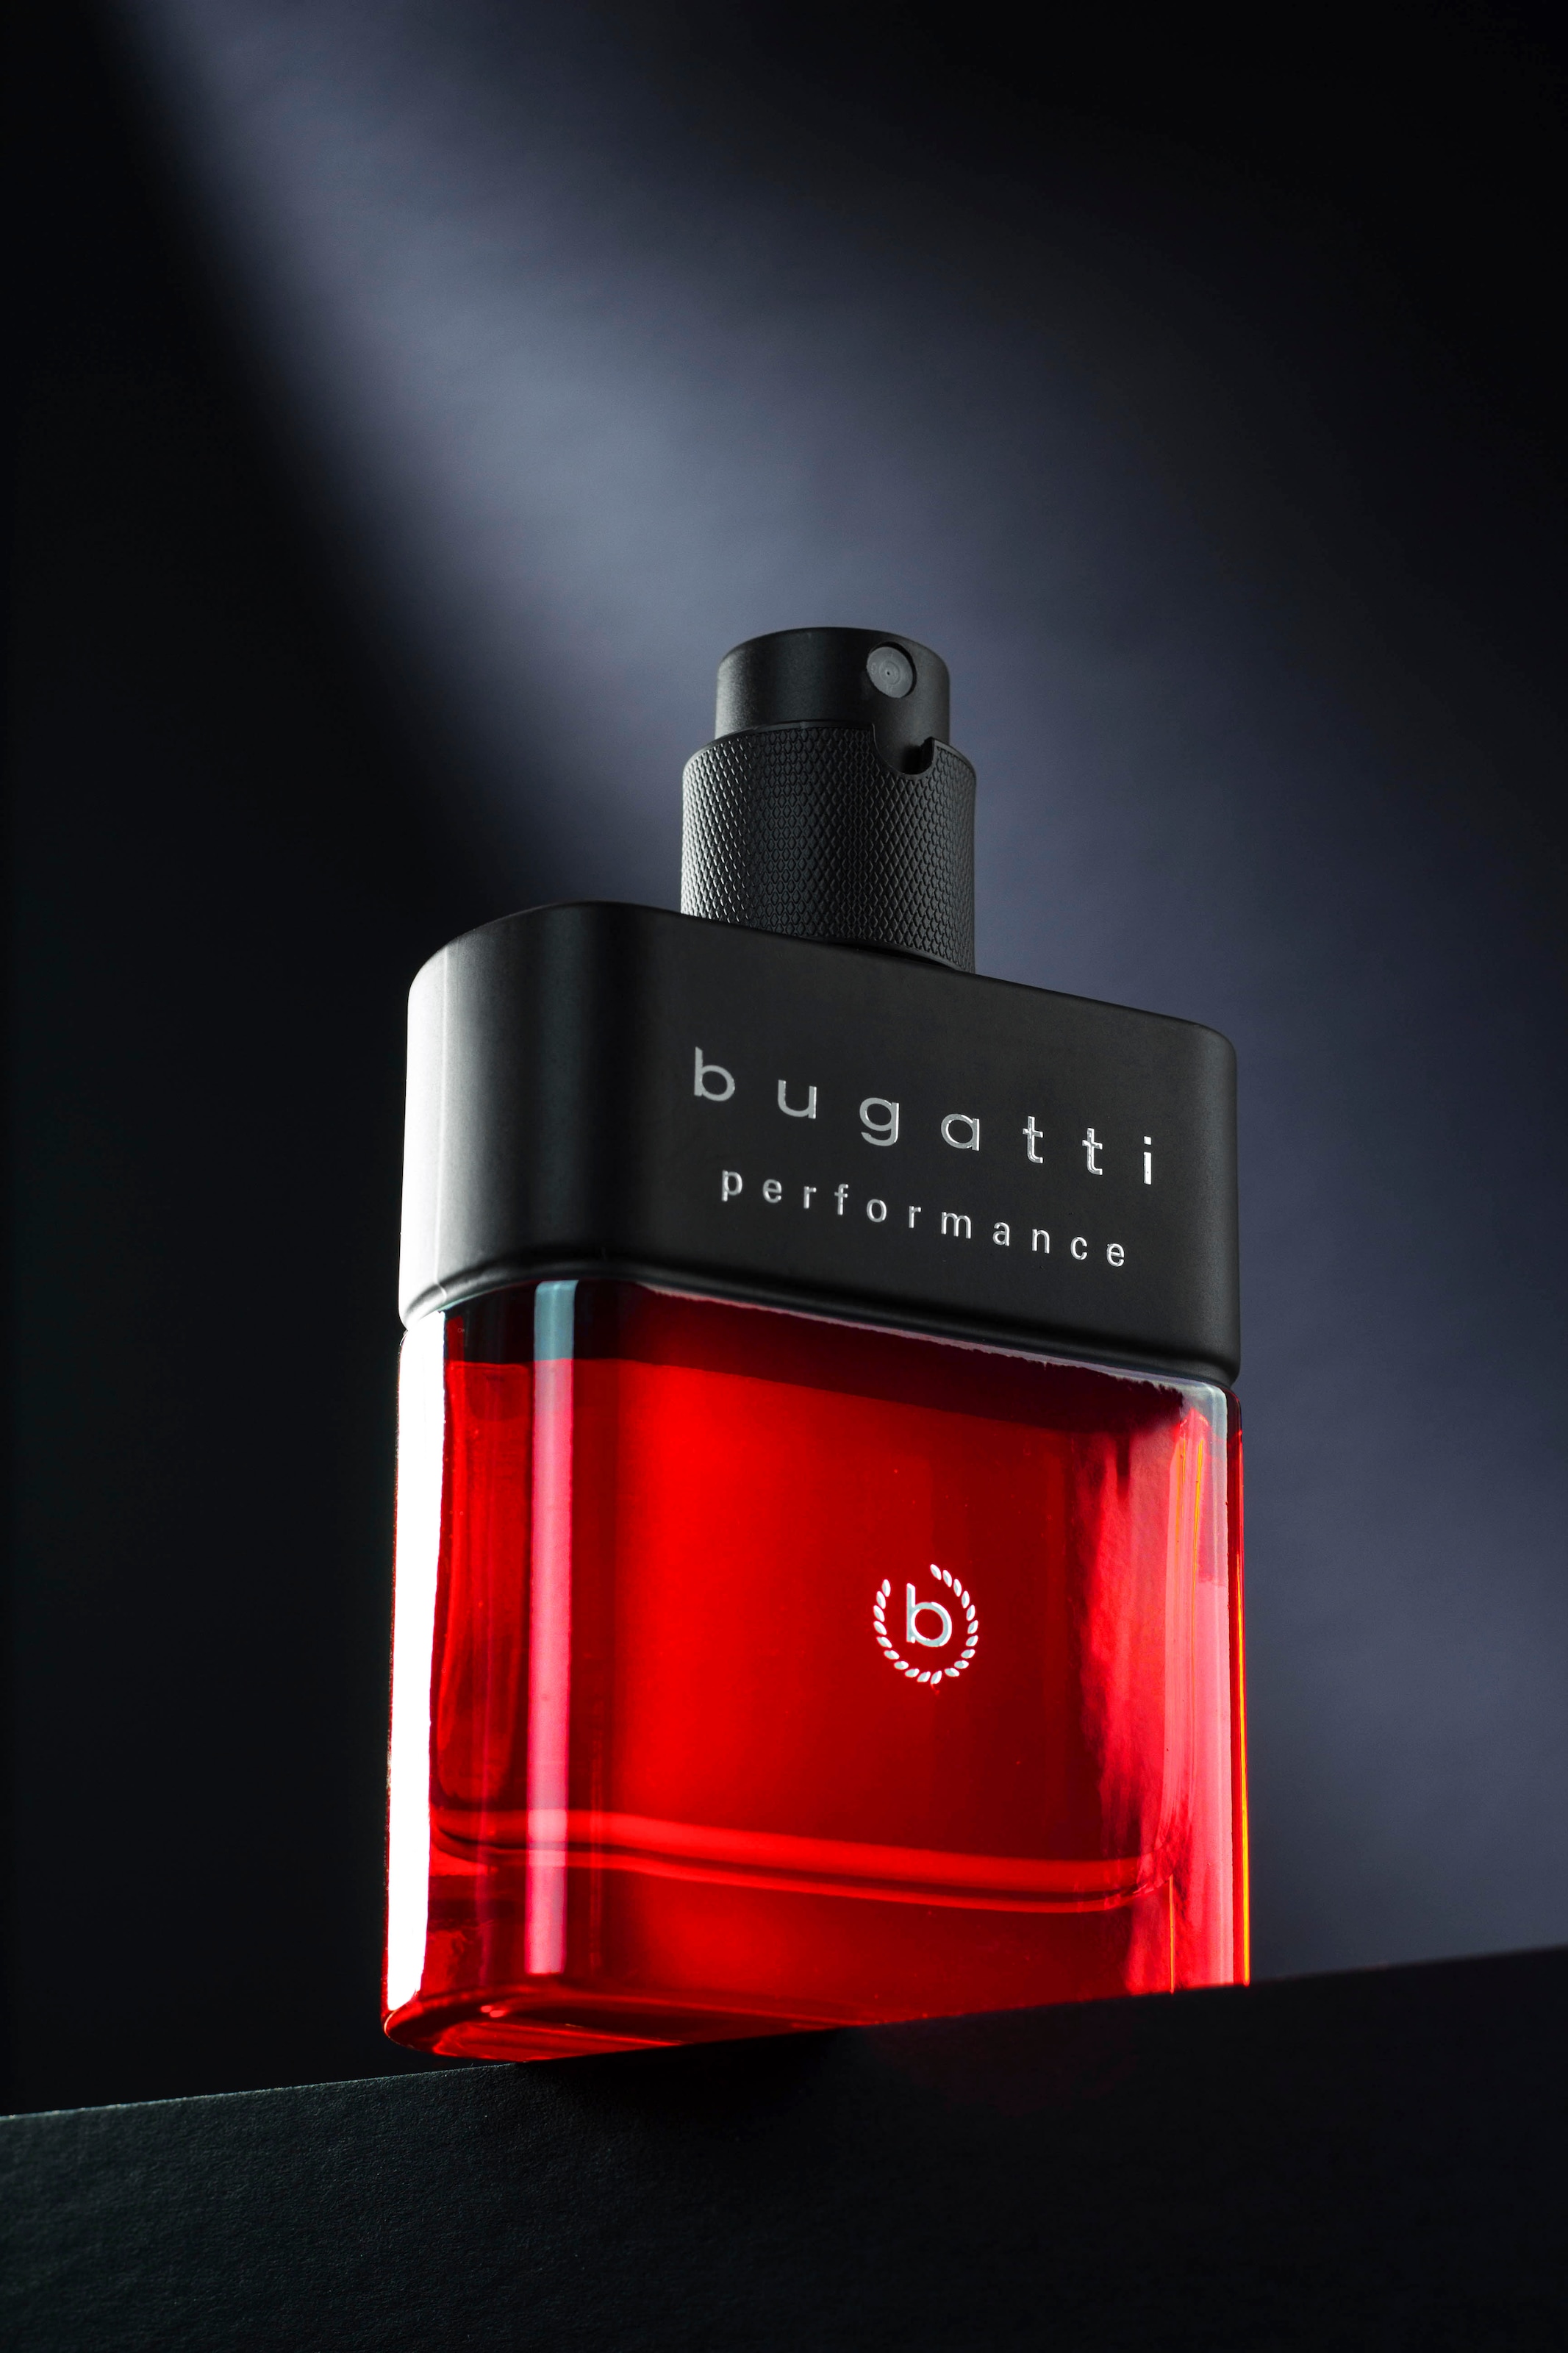 bugatti Eau de Toilette »BUGATTI Performance Red Limited Edition EdT 100ml«  | BAUR